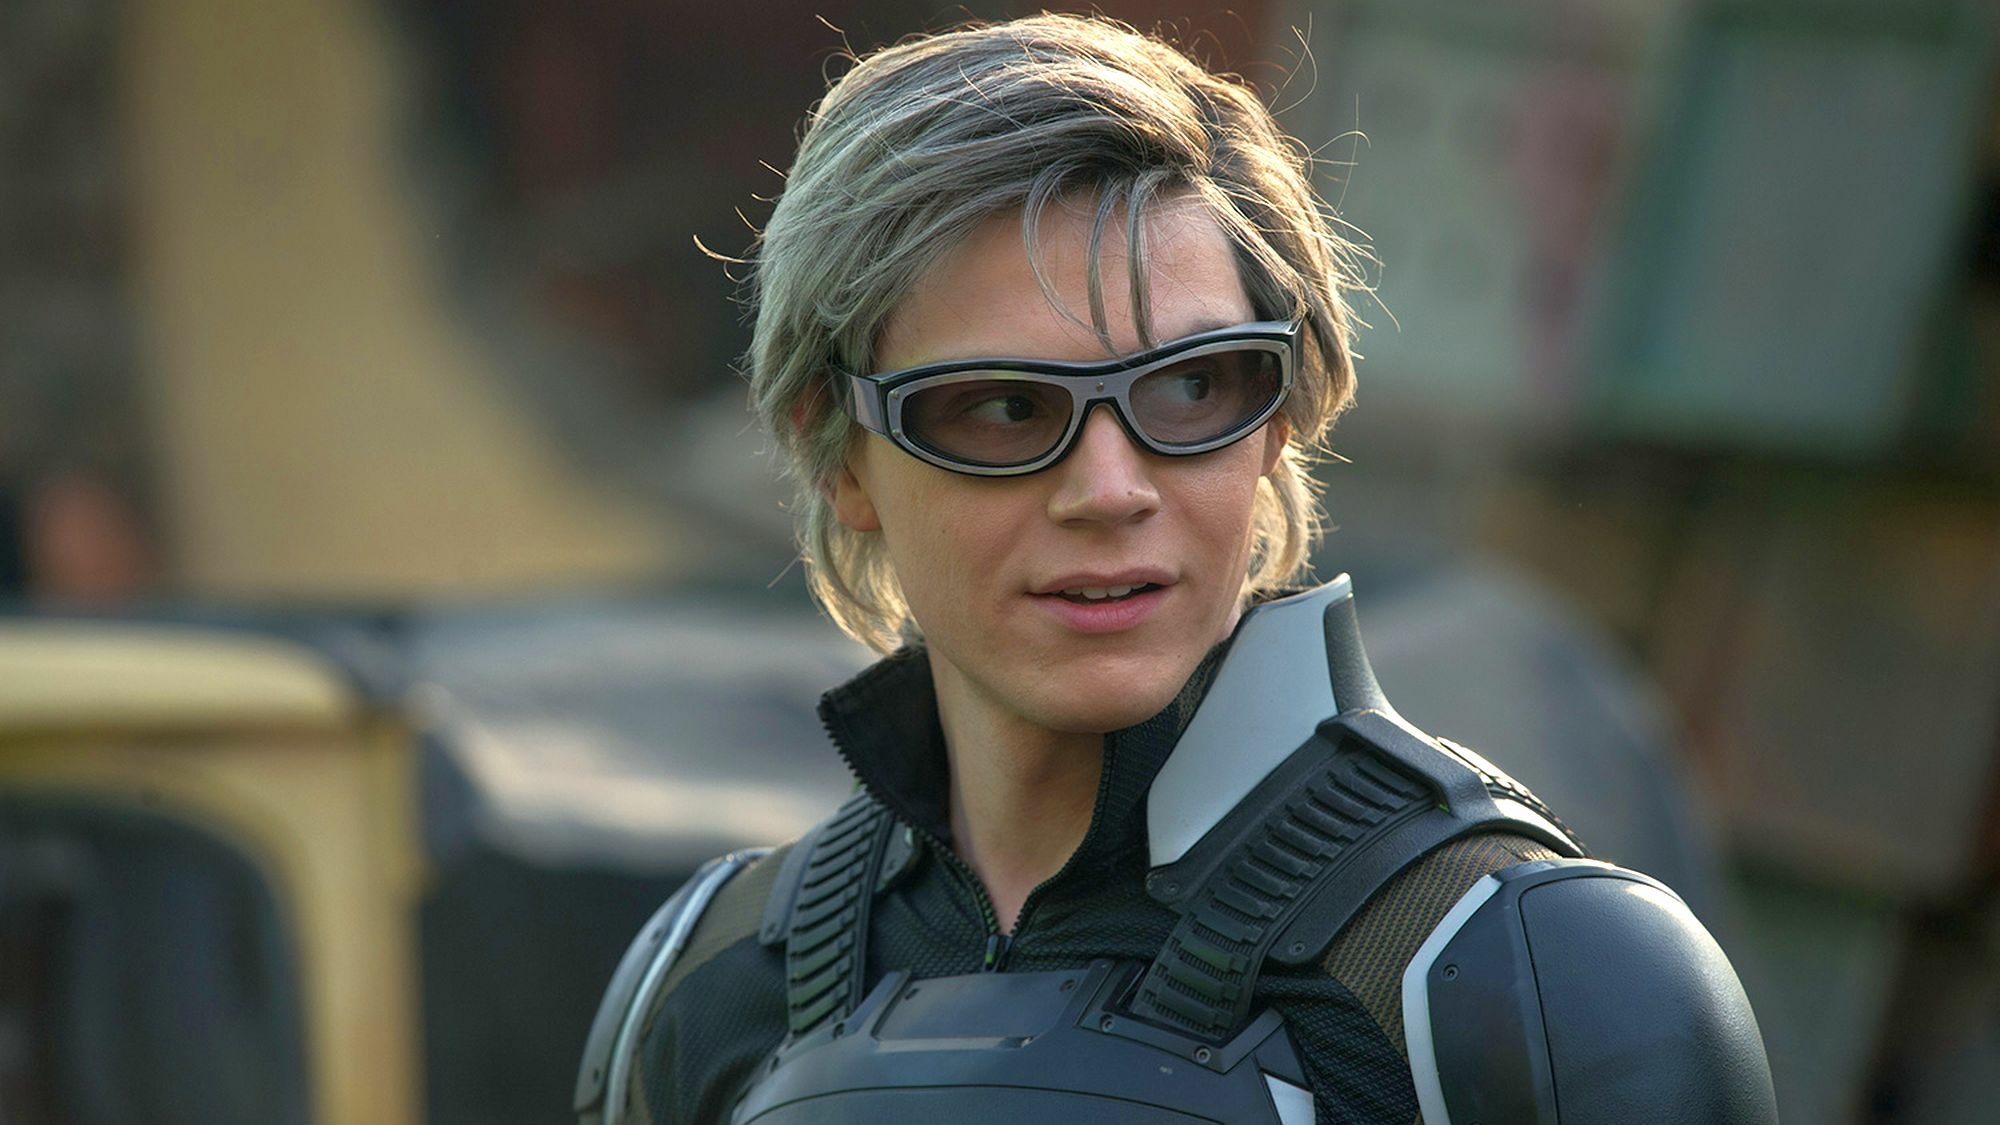 Evan Peters' Blue Hair in X-Men: Apocalypse - wide 2